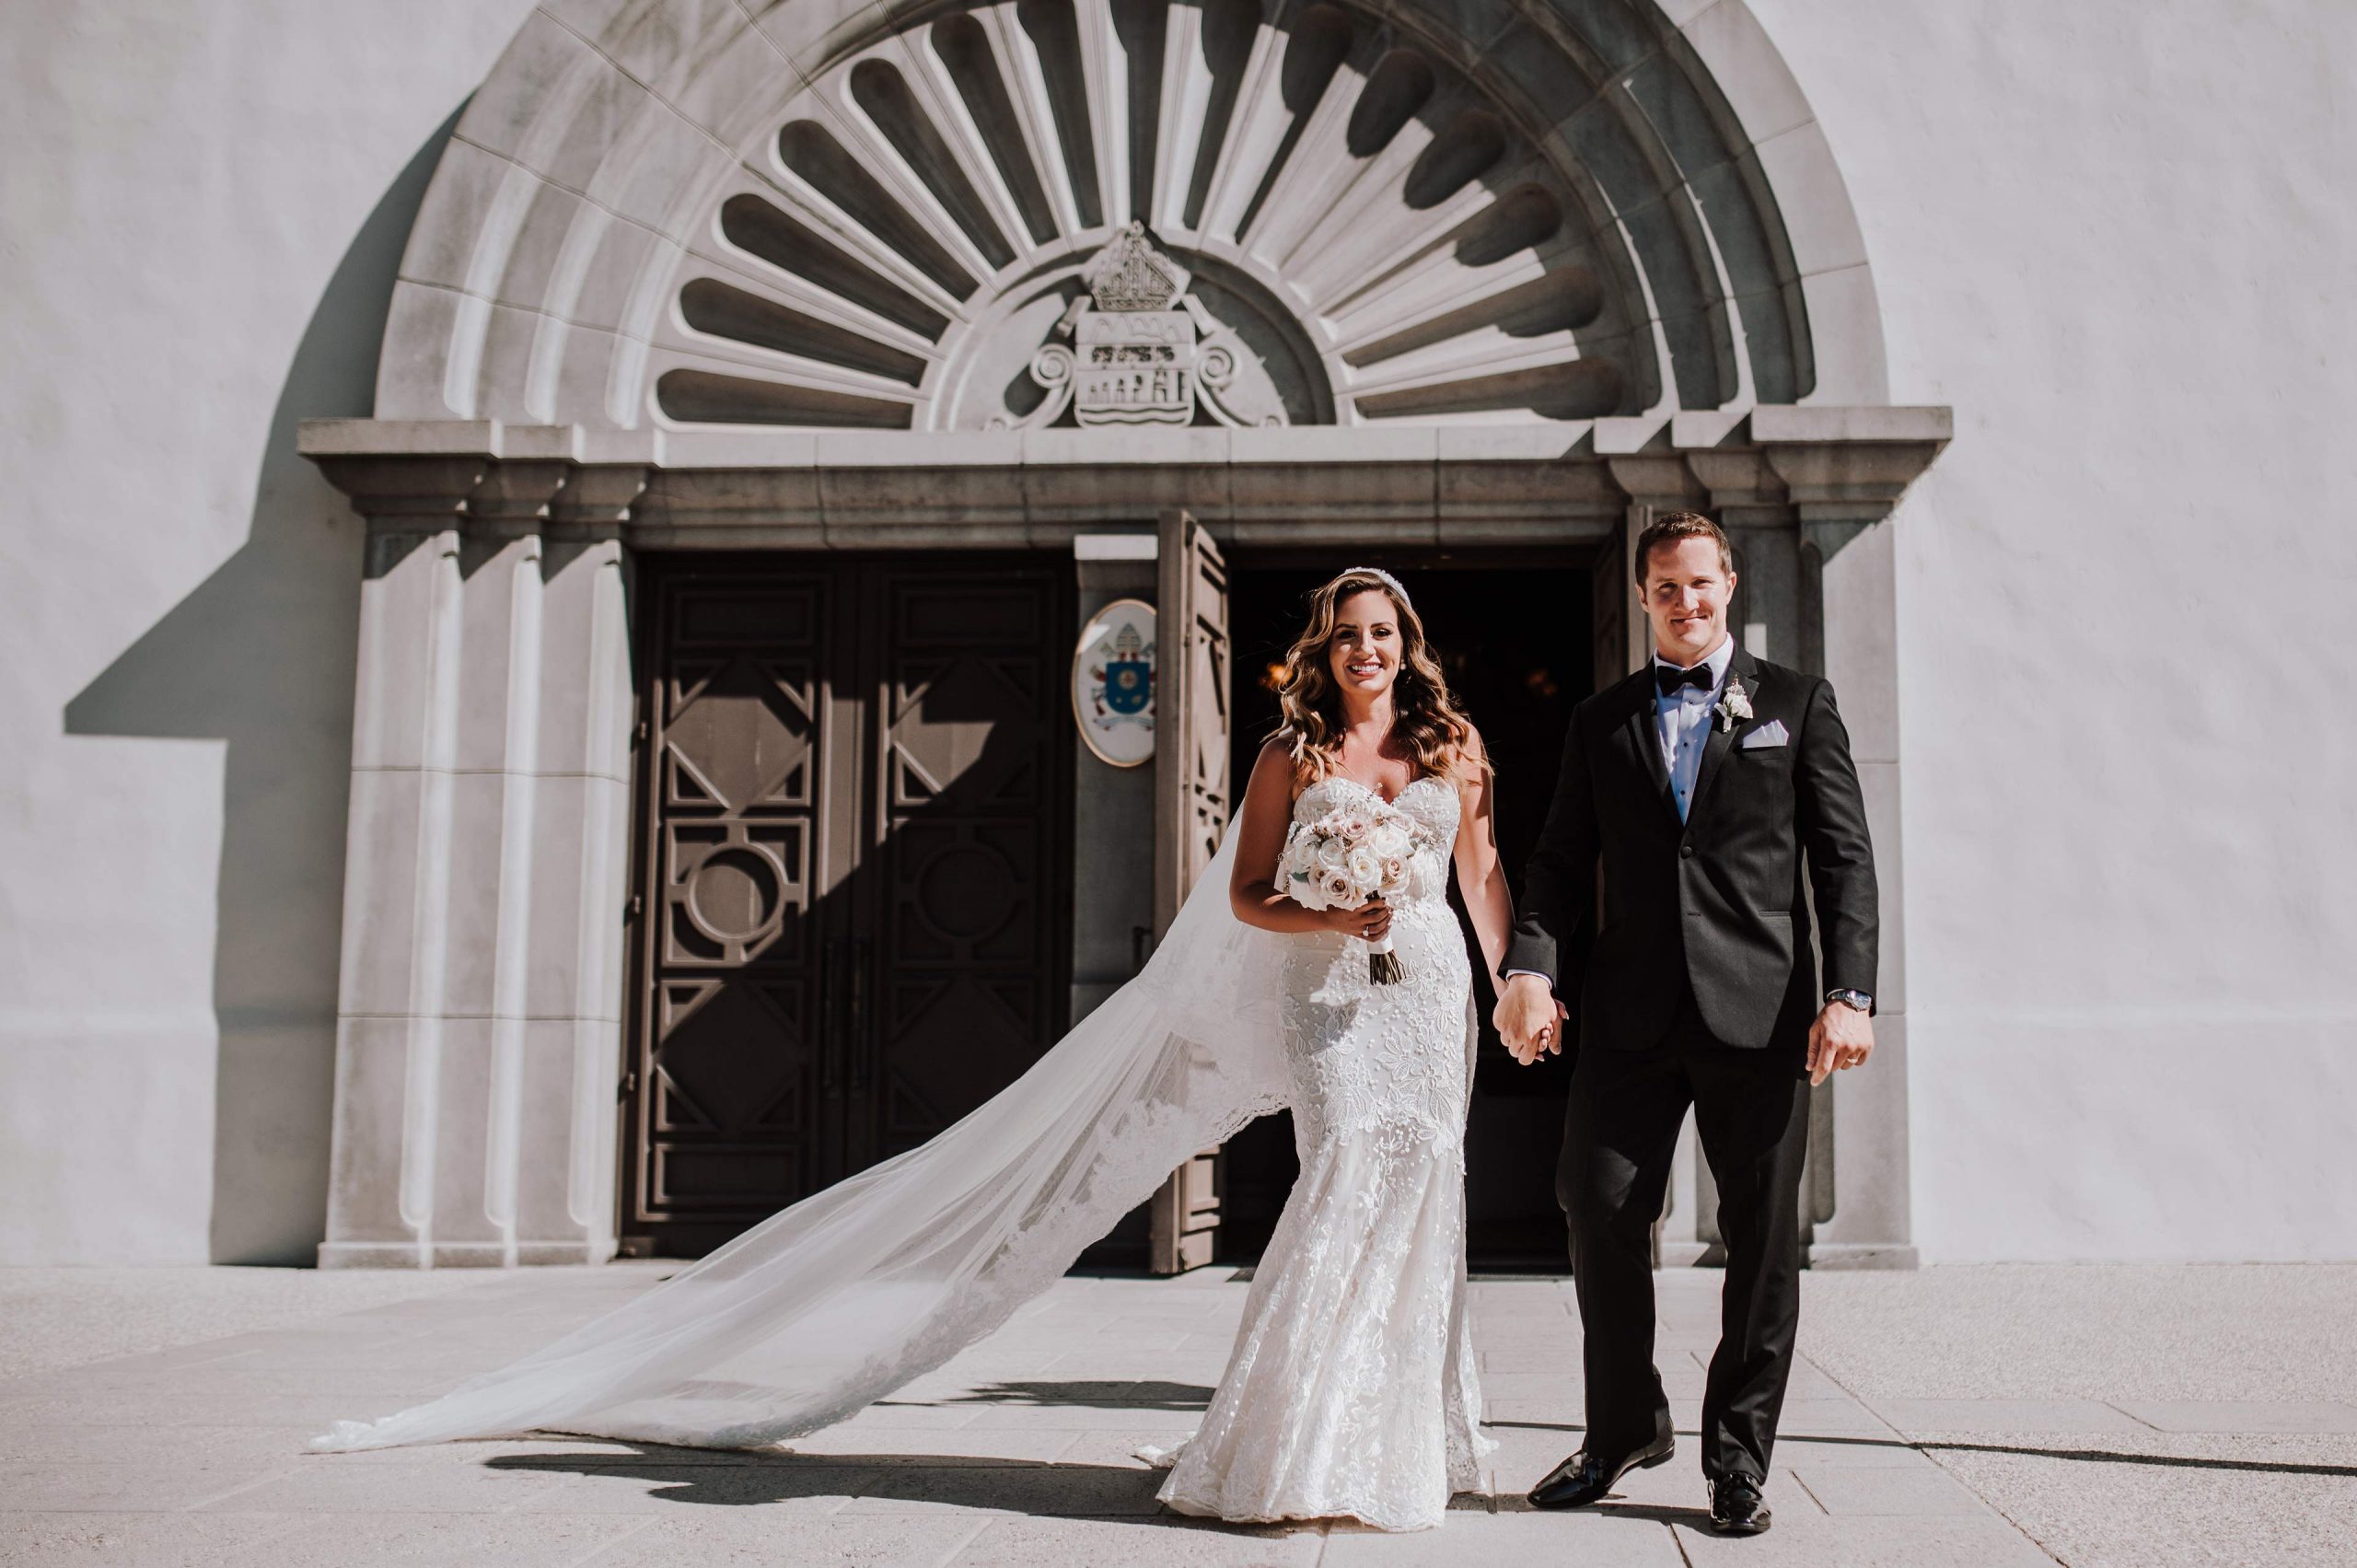 Mission Basilica San Juan Capistrano Wedding - wedding photography in California - 17